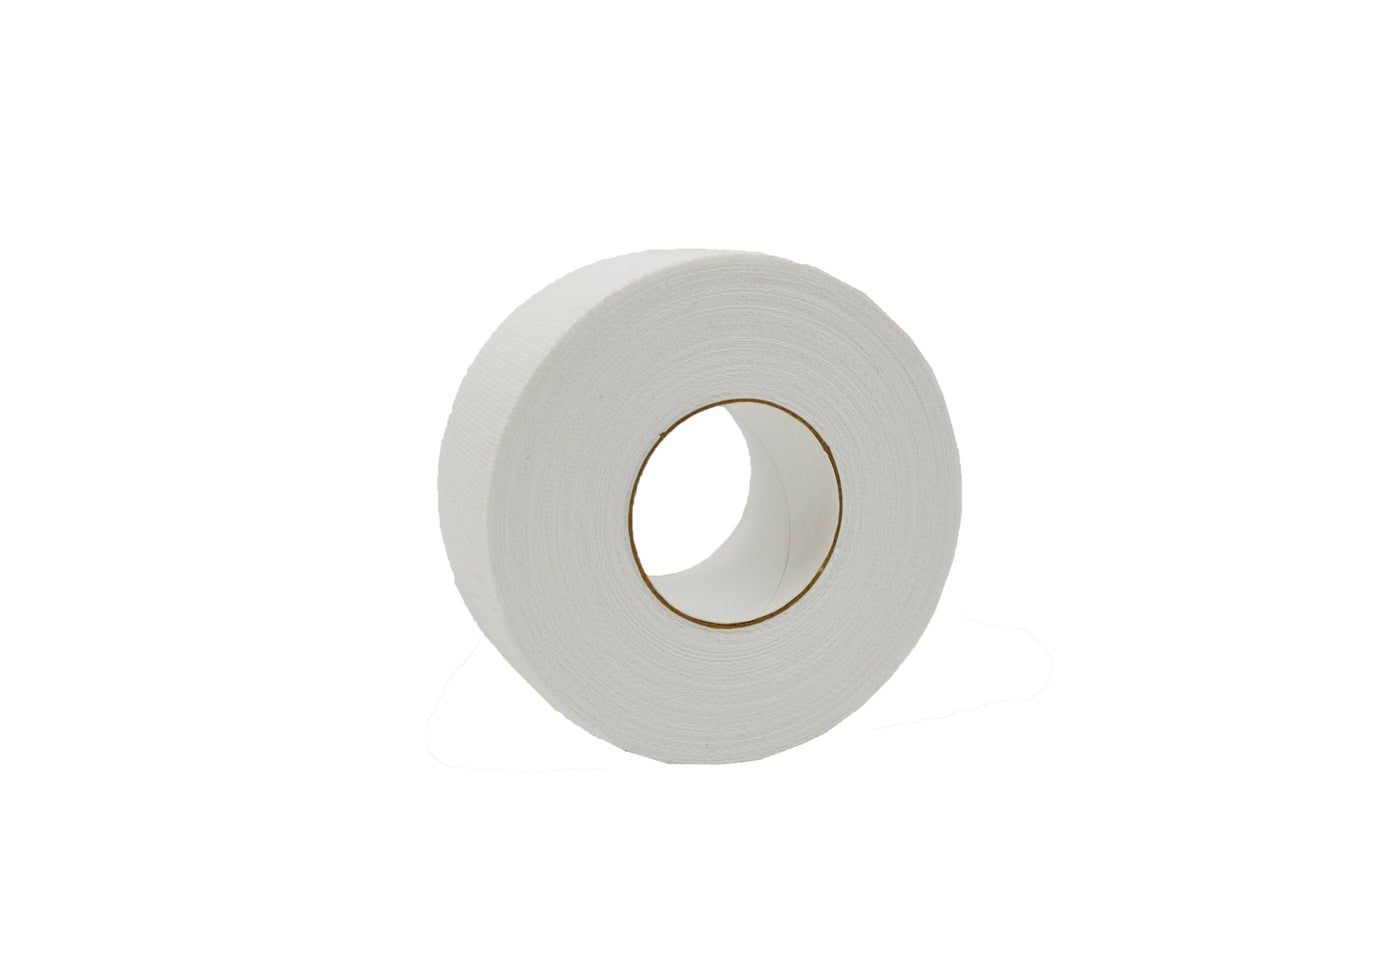 Adhesive Tape 2.5 cm x 4.5 m roll